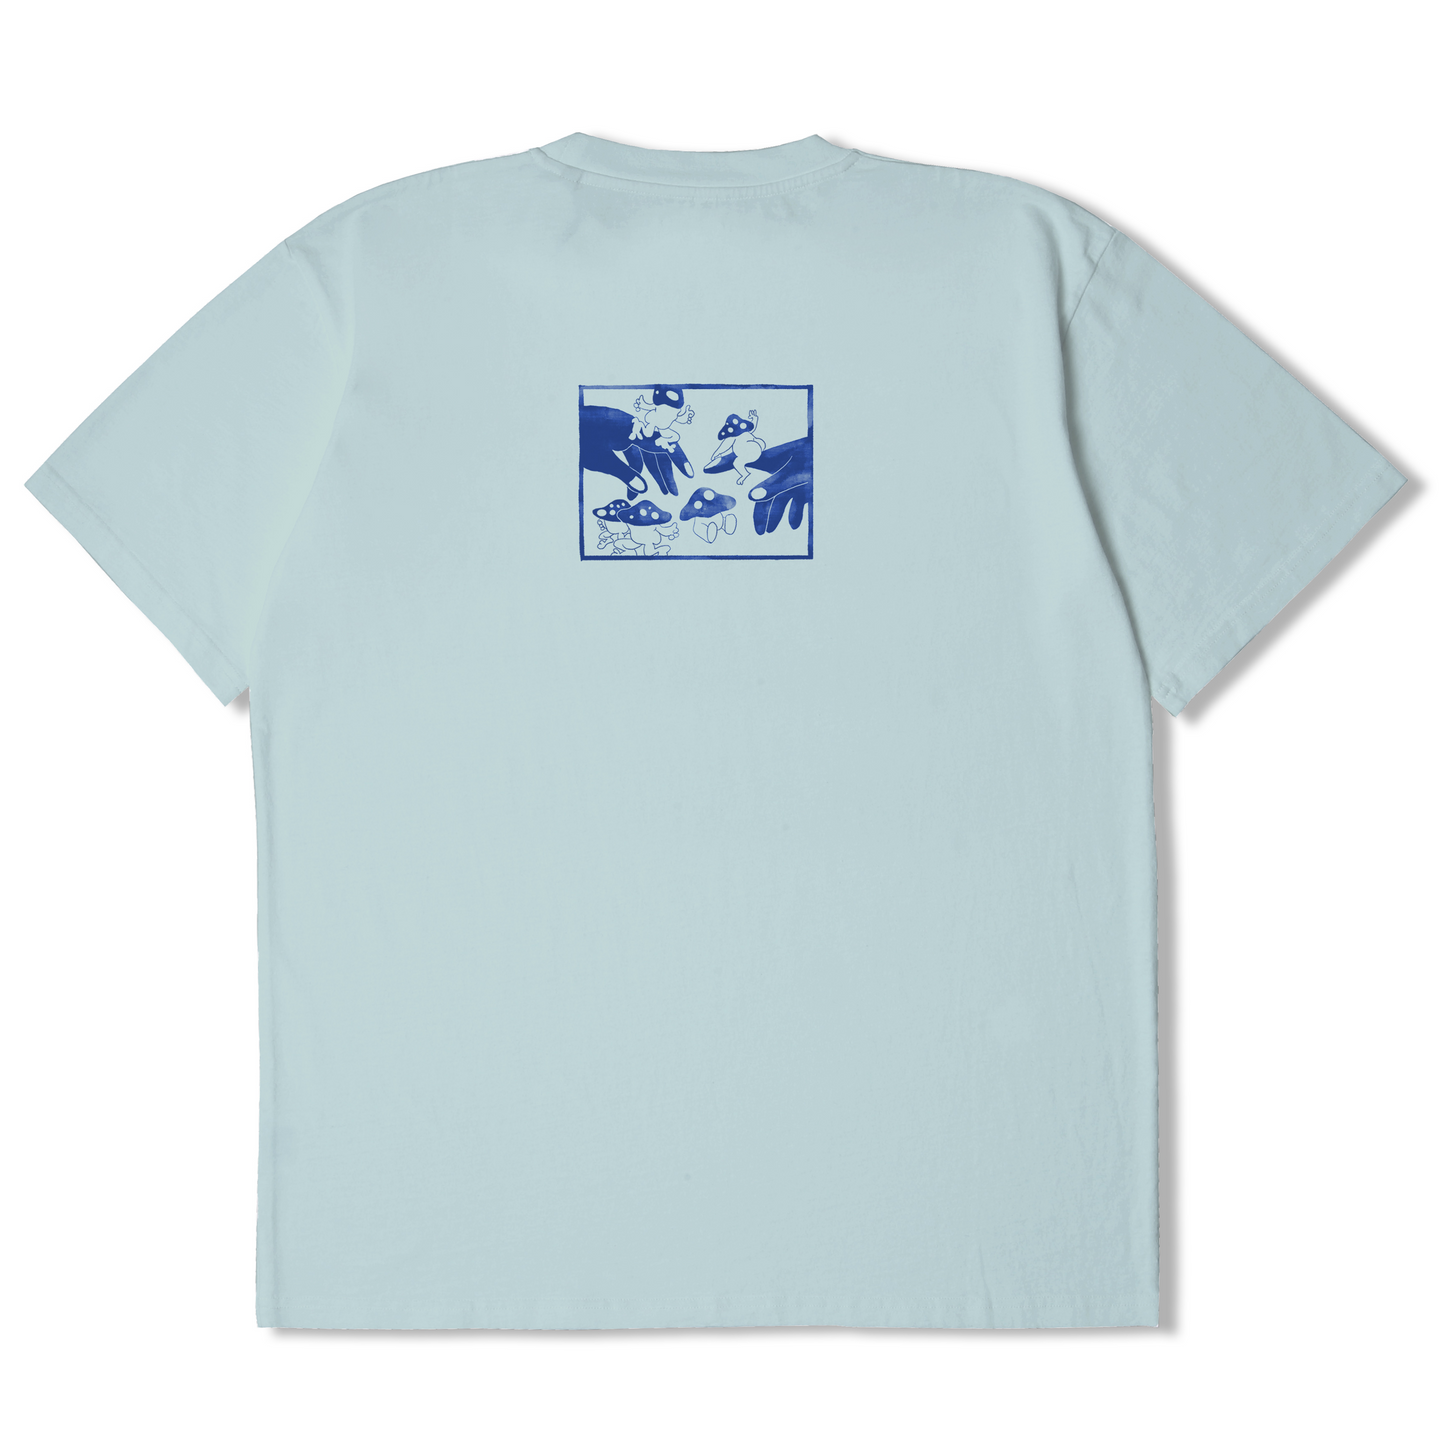 Edwin Earth Invaders T-Shirt